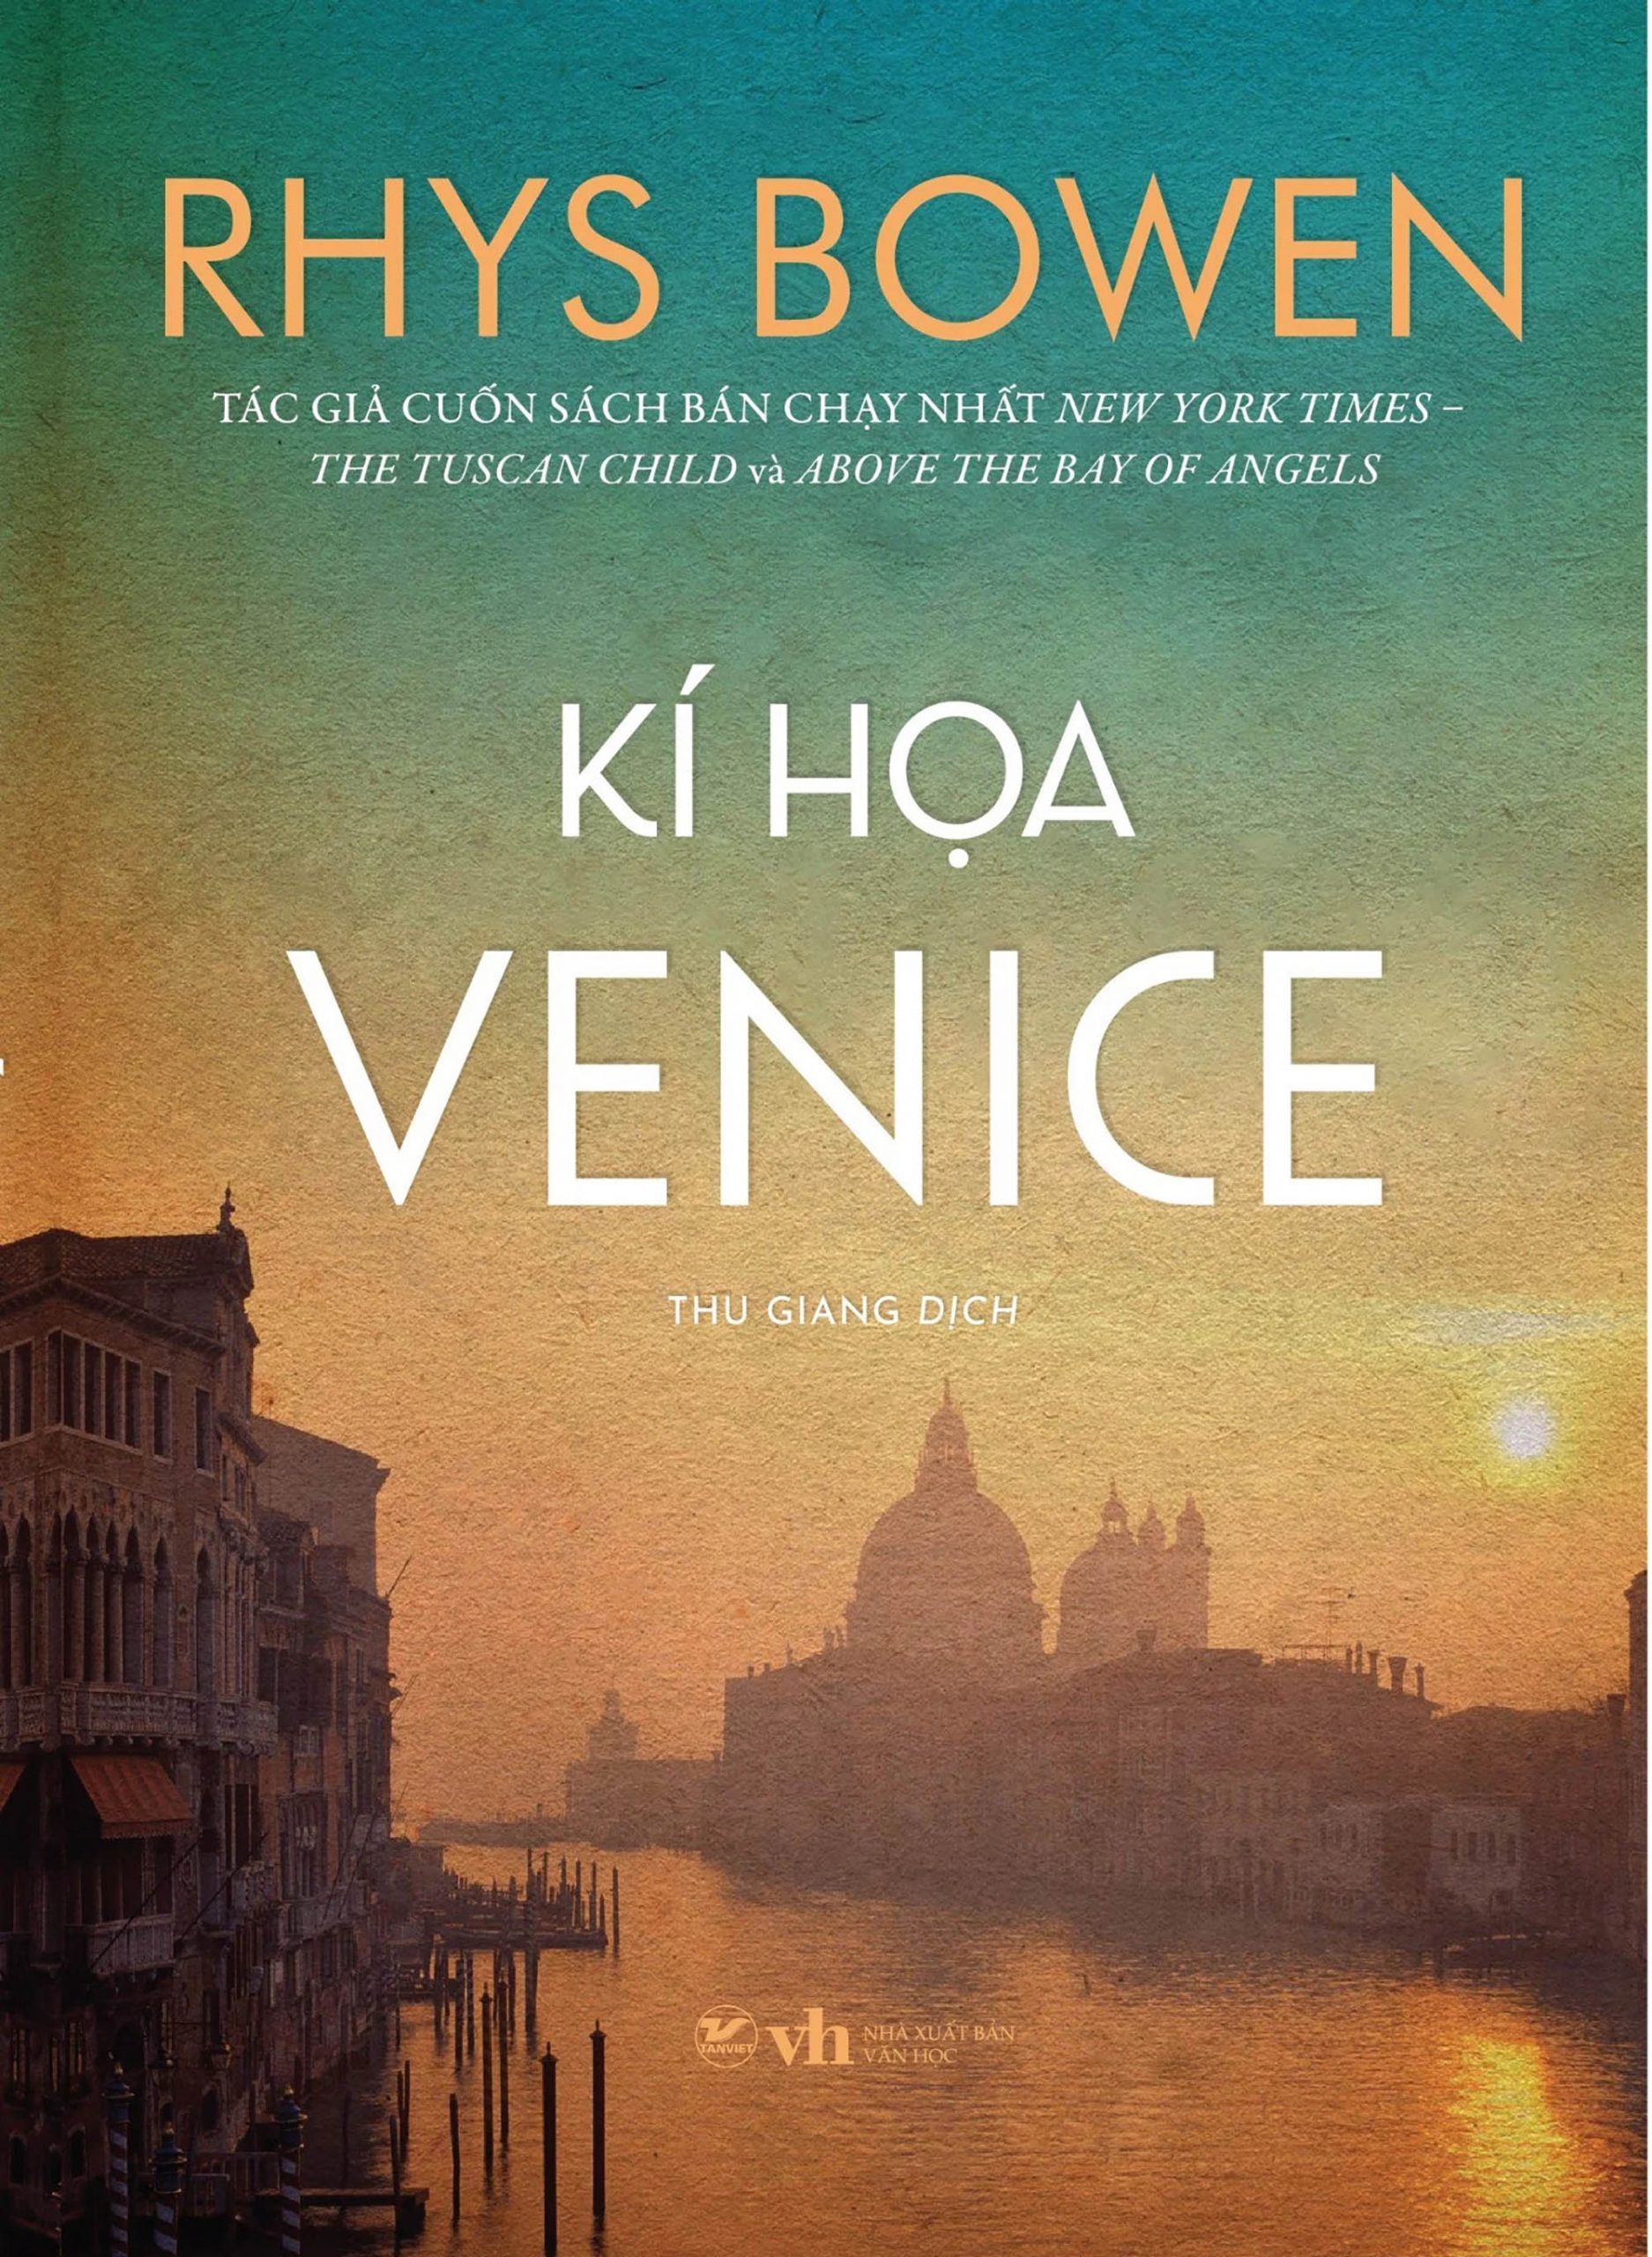 Venice review sách văn học